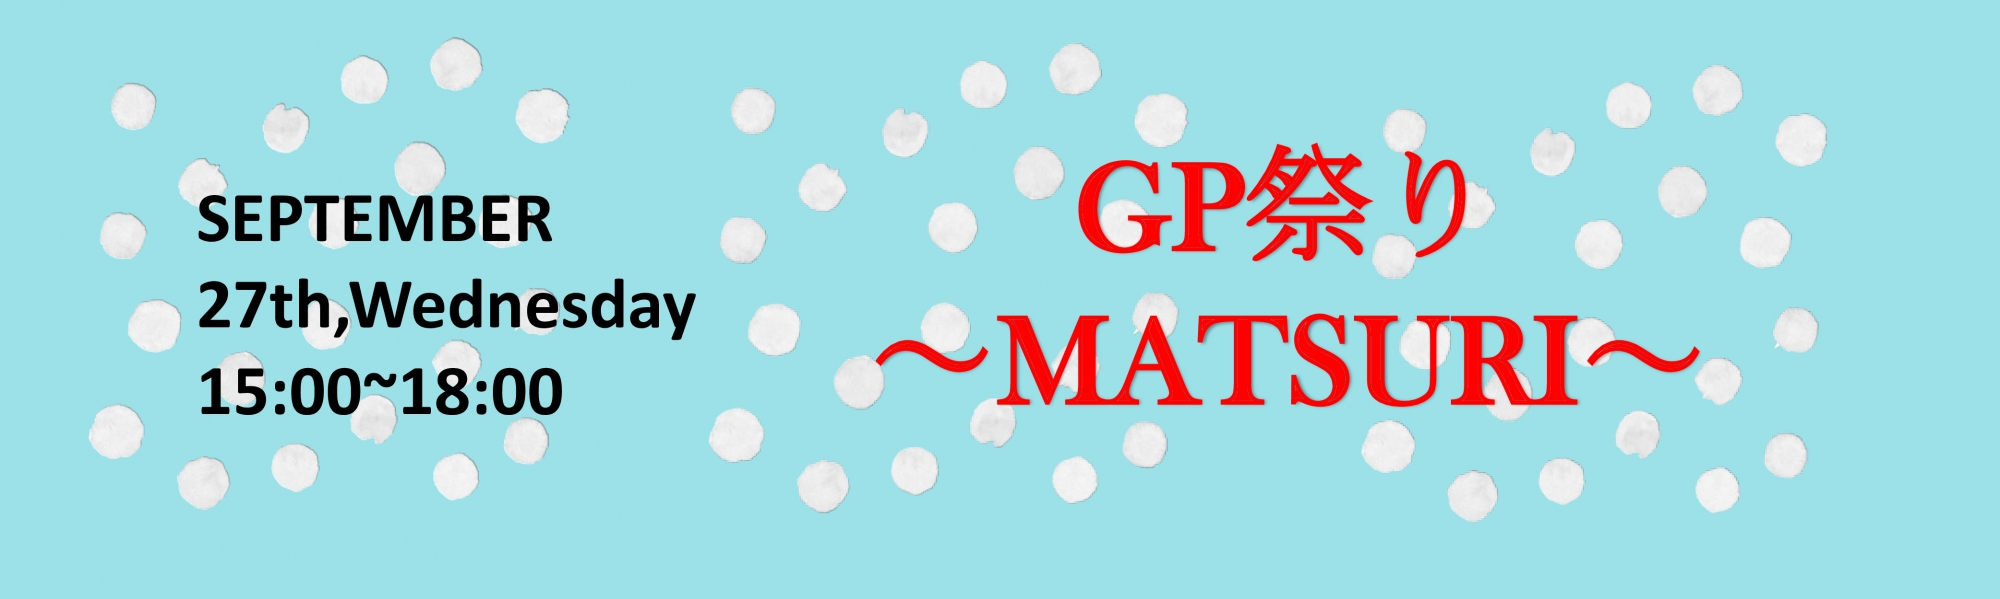 GP祭り ~matsuri~